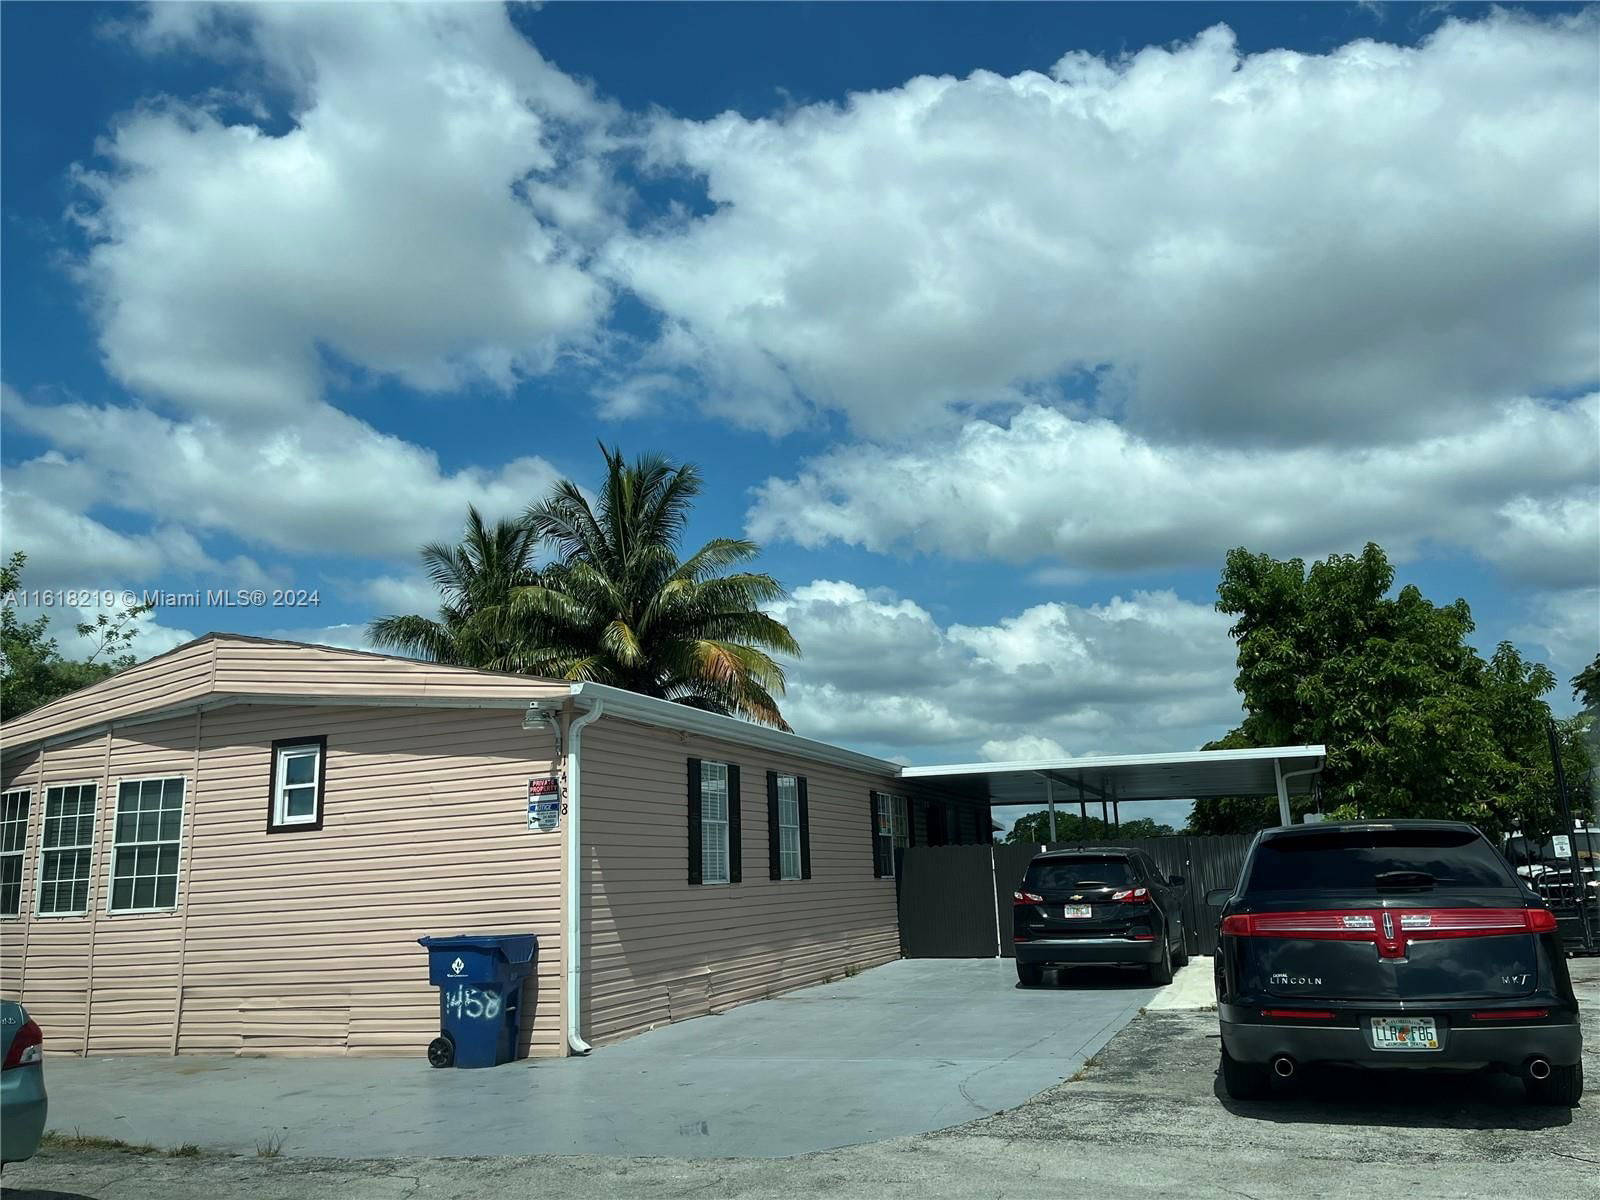 Real estate property located at 1458 127 ct, Miami-Dade County, University Lakes, Miami, FL